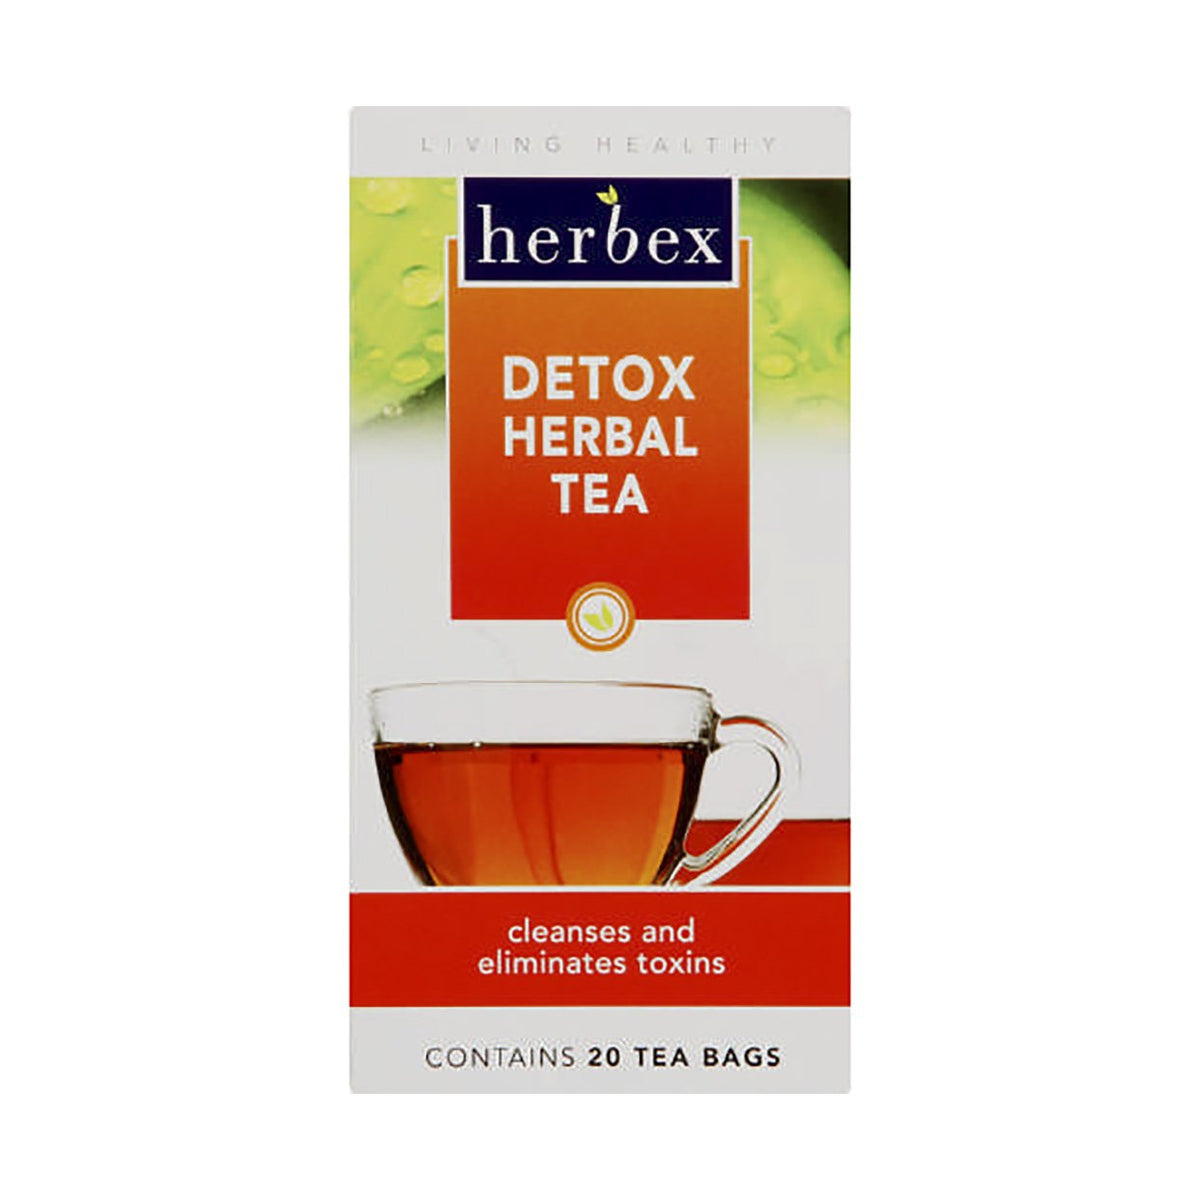 Herbex Fat Burn Booster for women 50ml